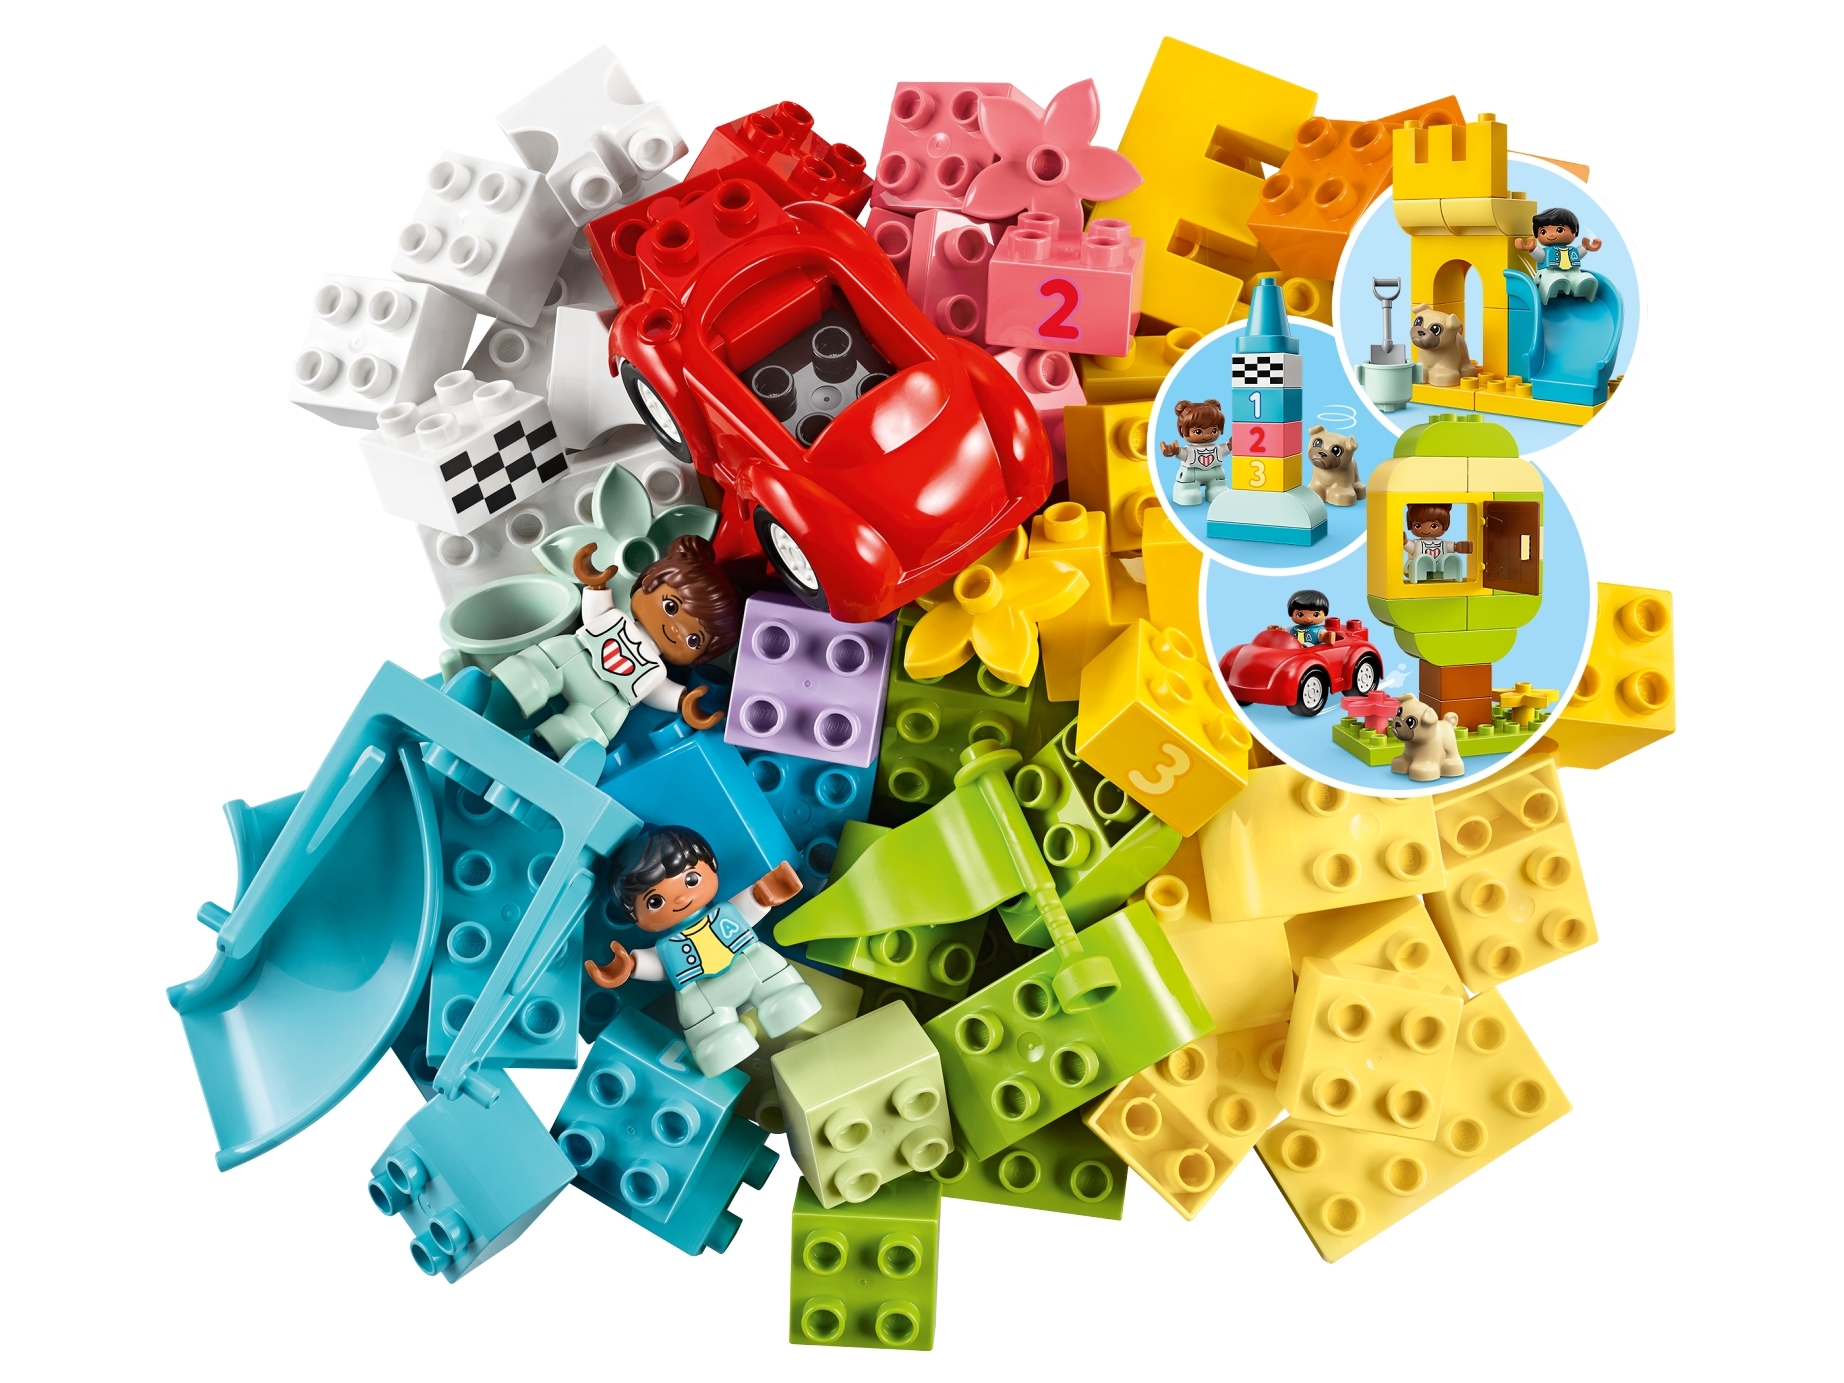 Red Lego Duplo Bricks 2 X 8 X 1 4 